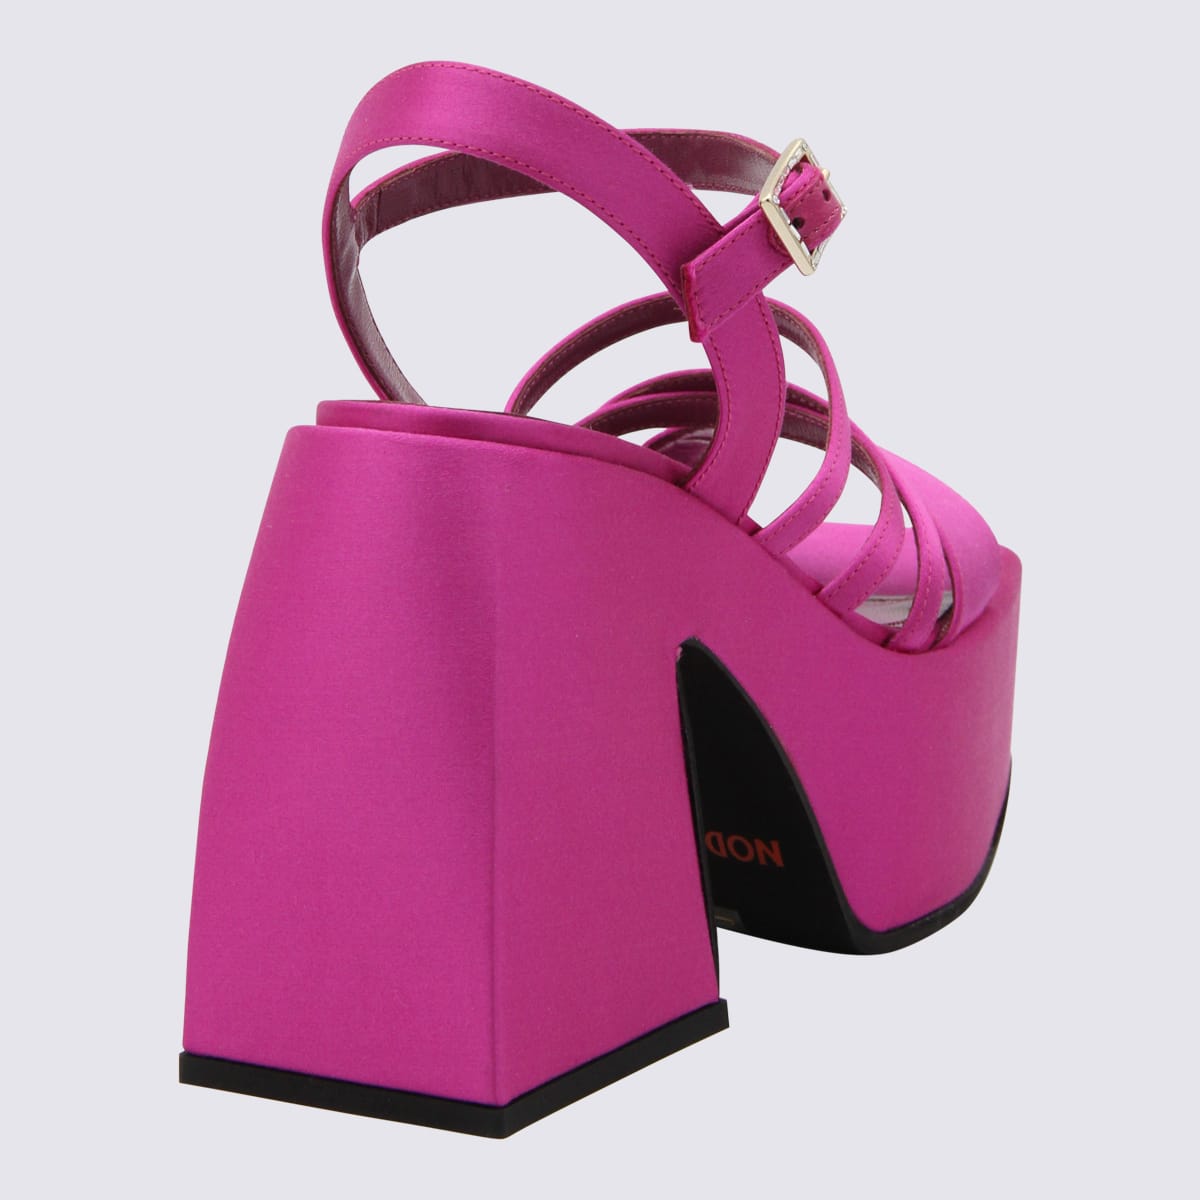 Nodaleto Pink Satin Bulla Chibi Sandals